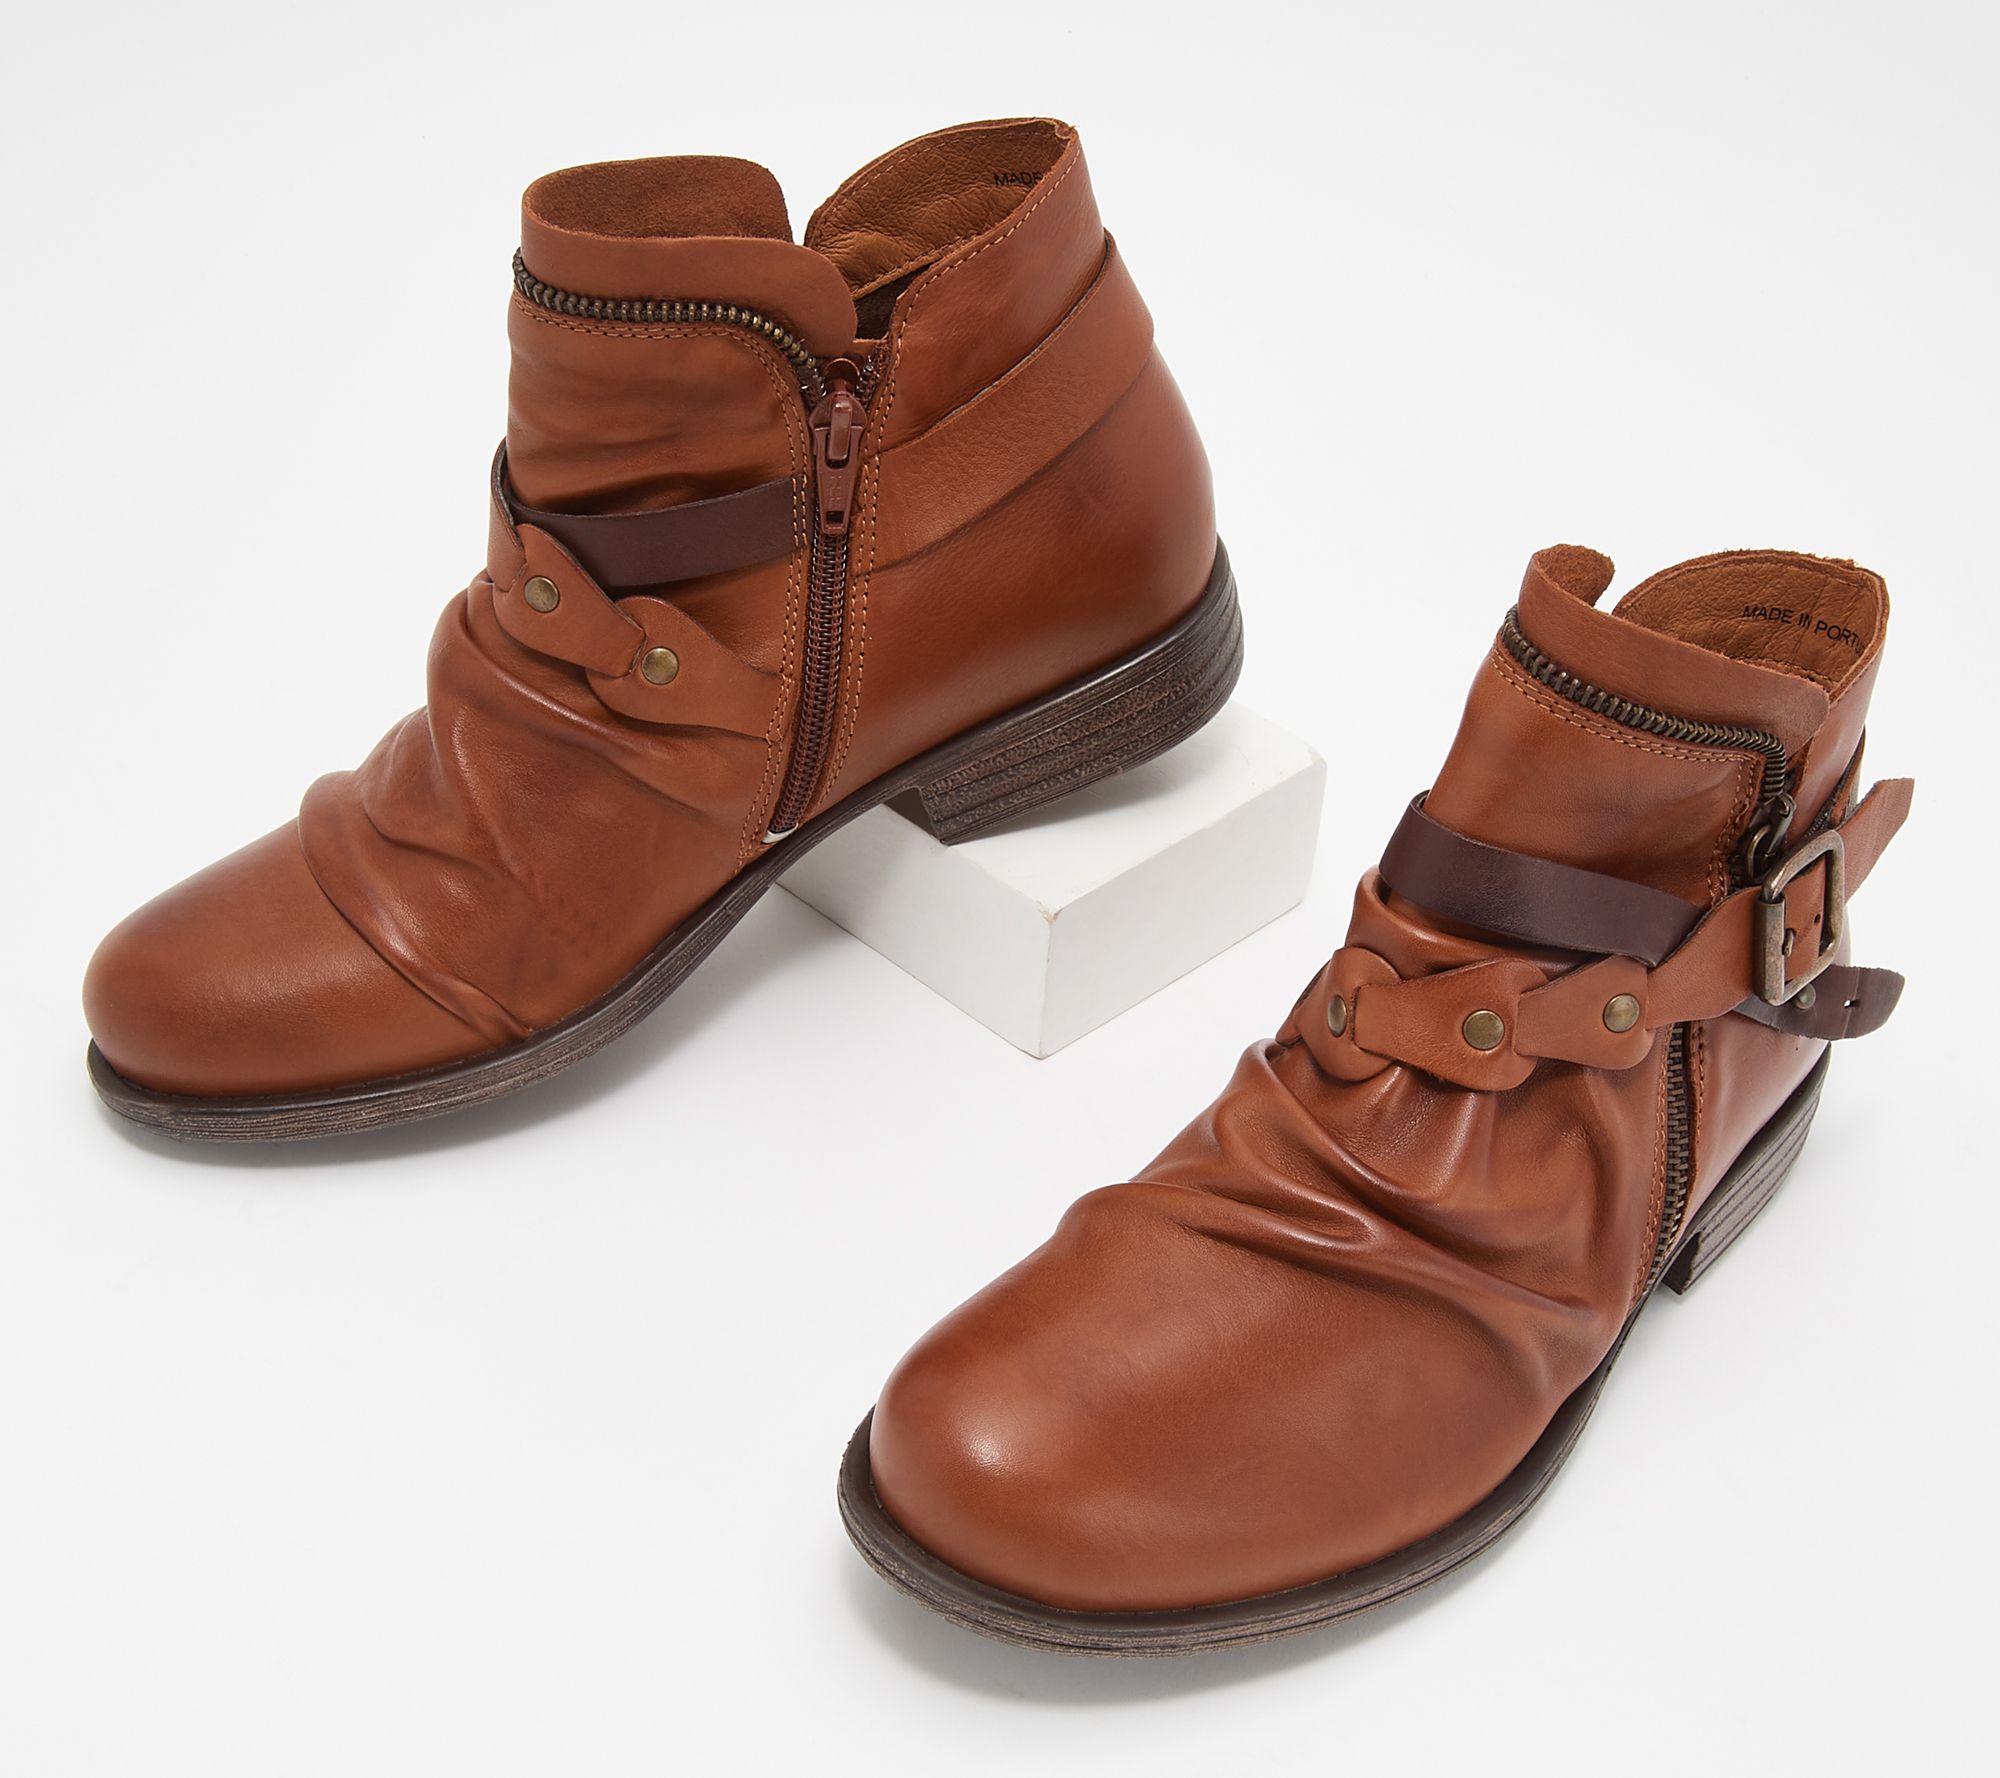 Miz Mooz Leather Buckled Ankle Boots - Lagos